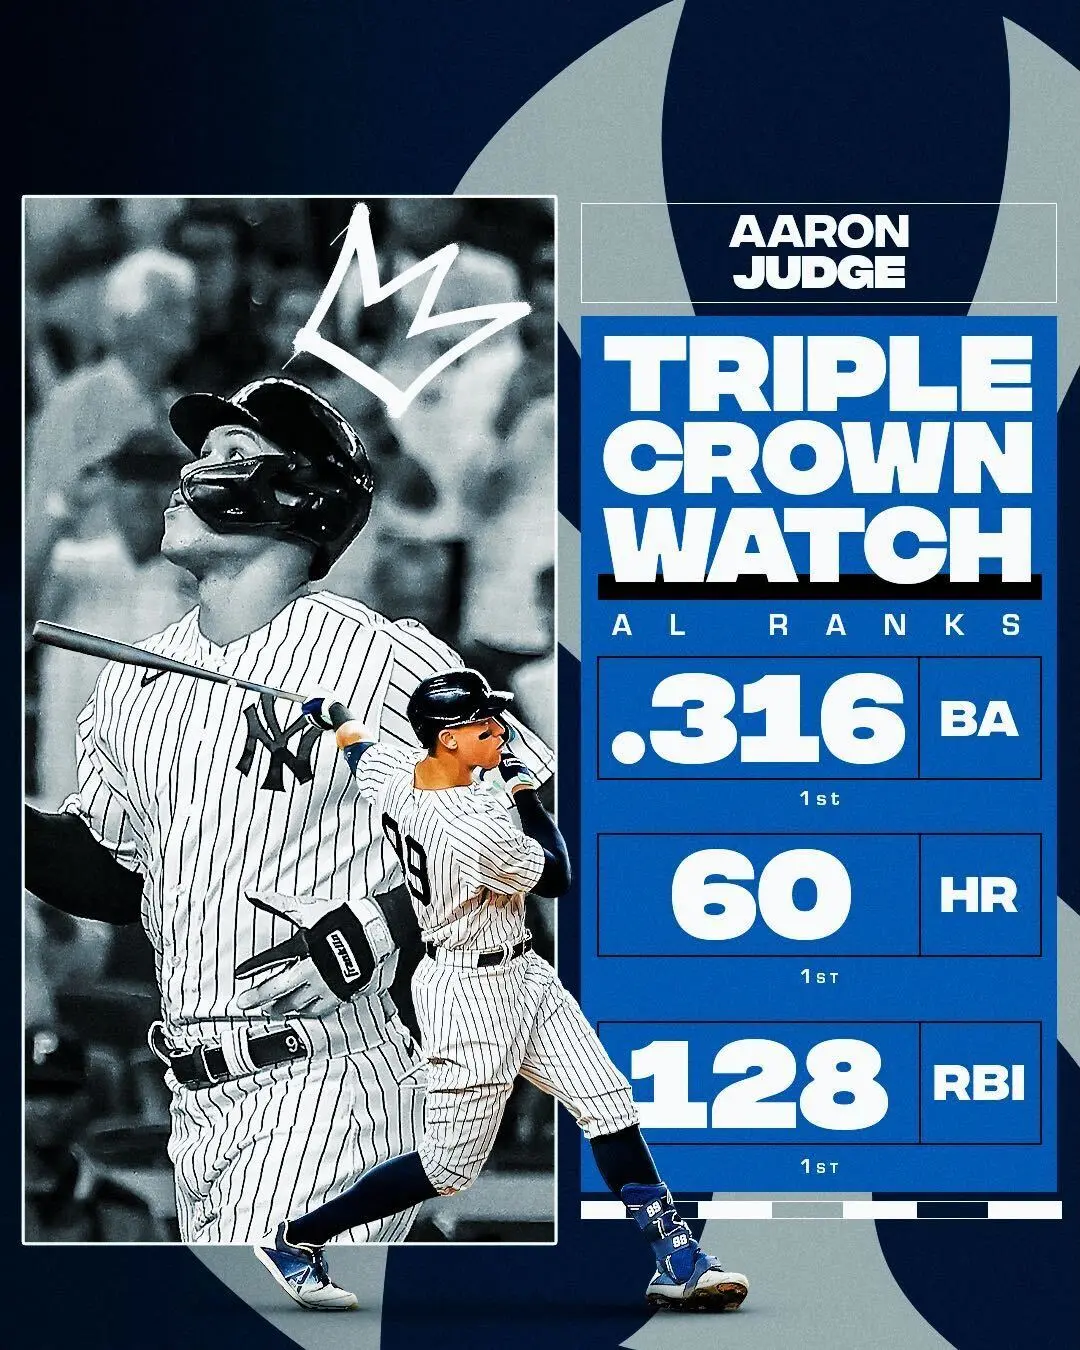 Aaron Judge conquistou seu home run de número 60 na temporada e o New York Yankees (89-58) venceu, de virada na última entrada, a equipe do Pittsburgh Pirates (55-93). A partida aconteceu no Yankee Stadium nesta terça-feira (20). 